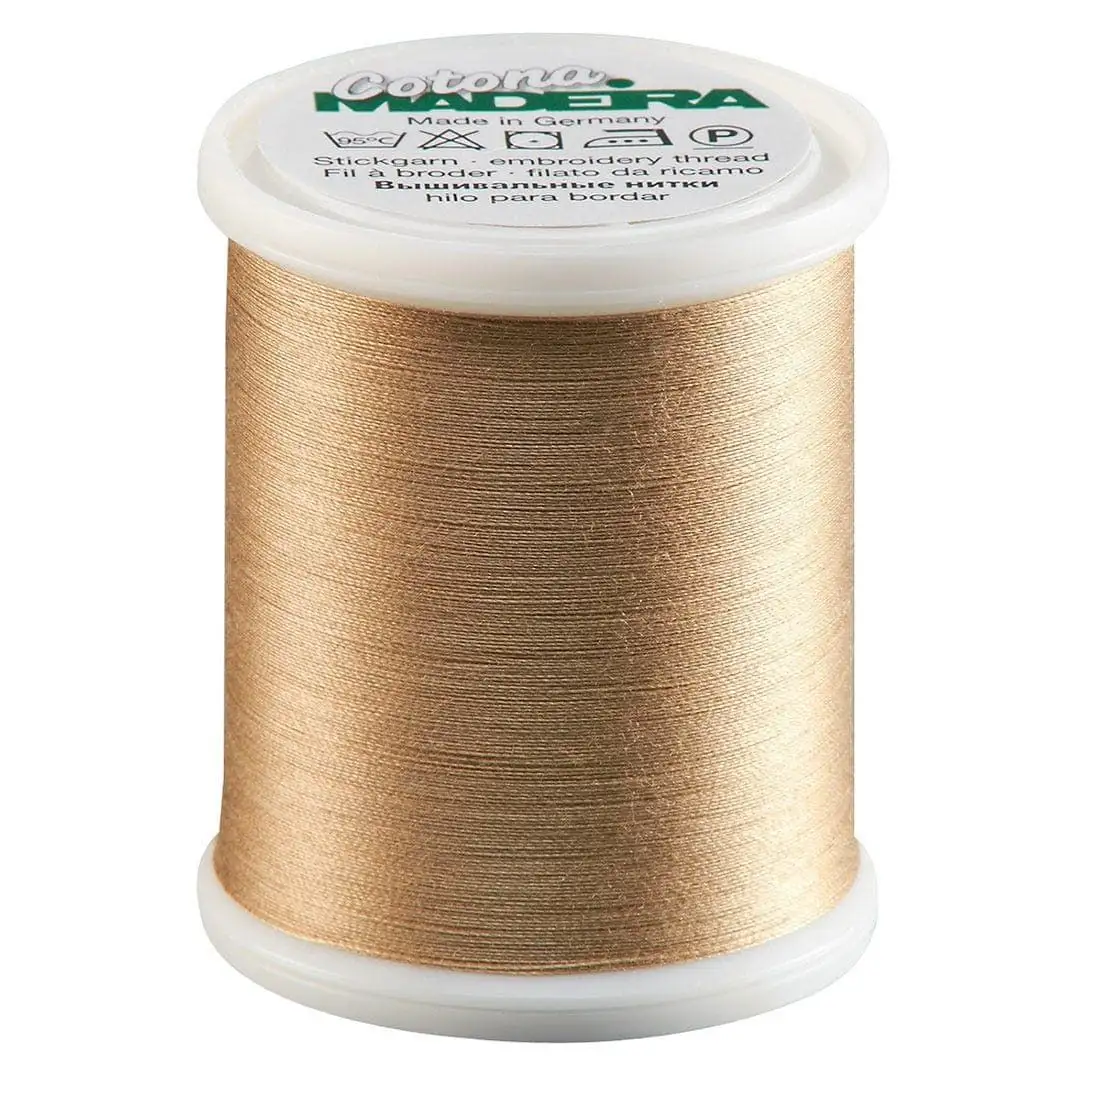 Madeira Cotona 50wt Cotton - 701 Light Olive